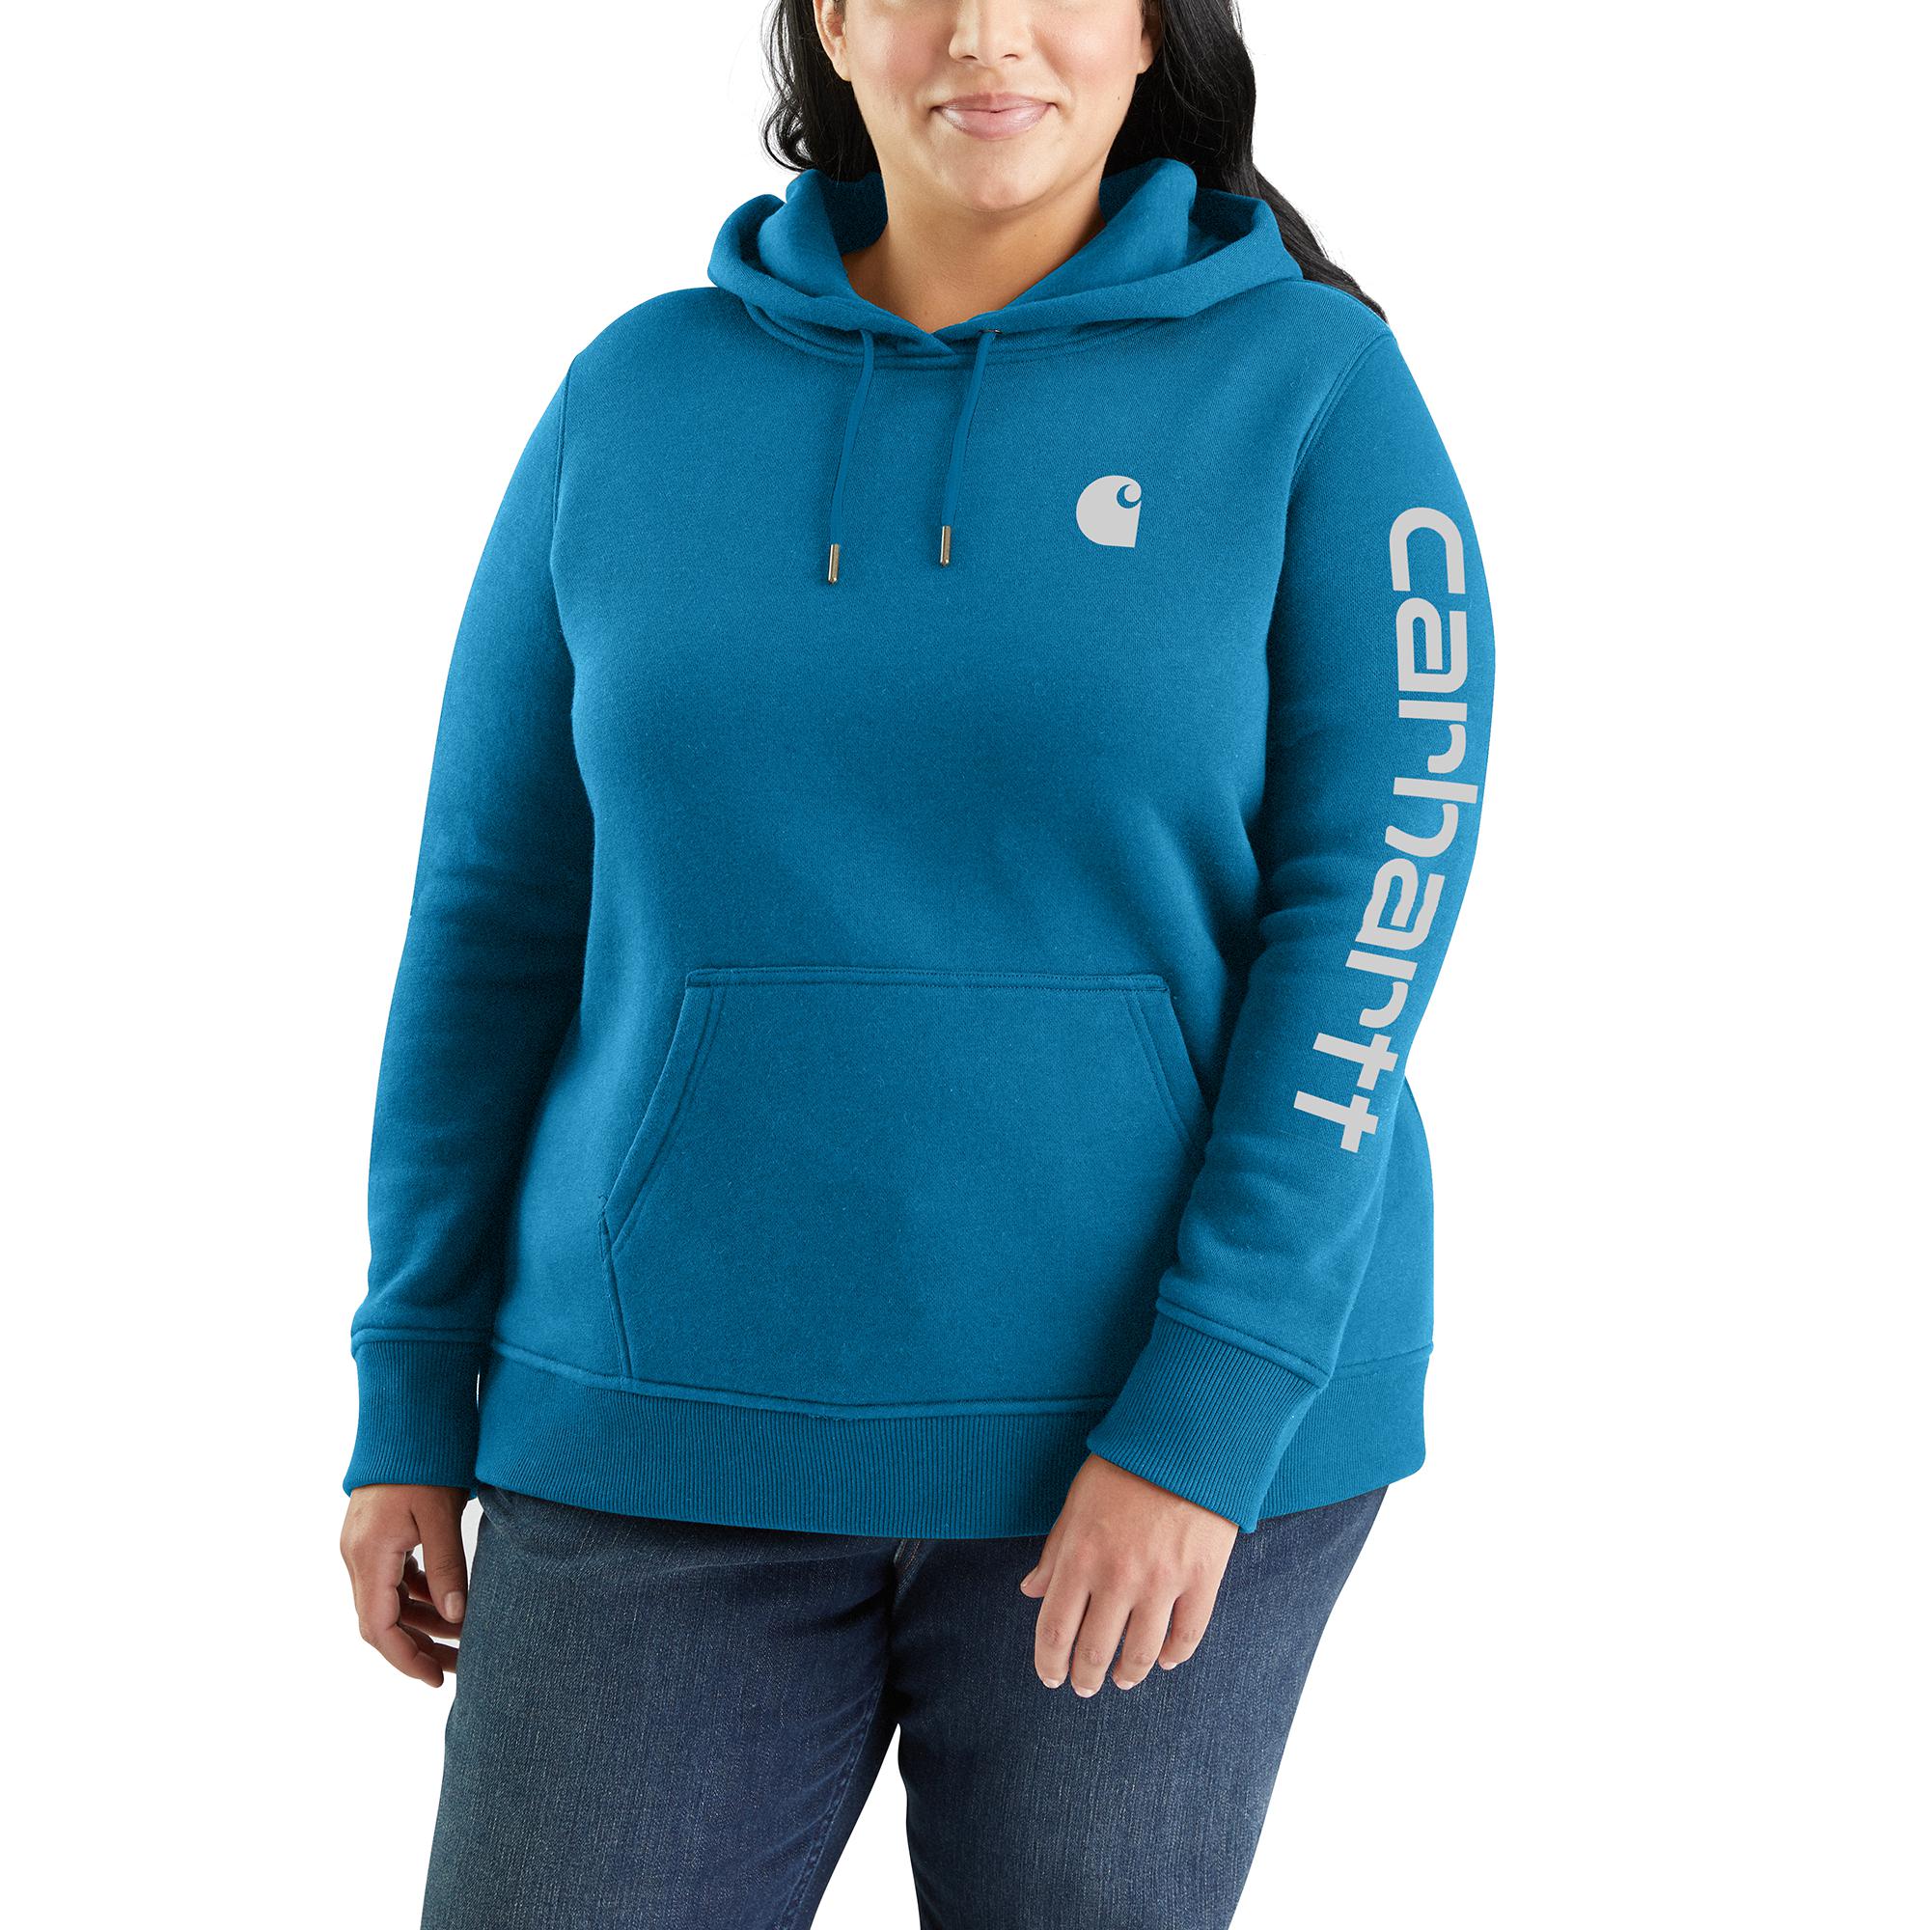 Best Deal for Carhartt Women's Clarksburg Pullover Sweatshirt (Regular